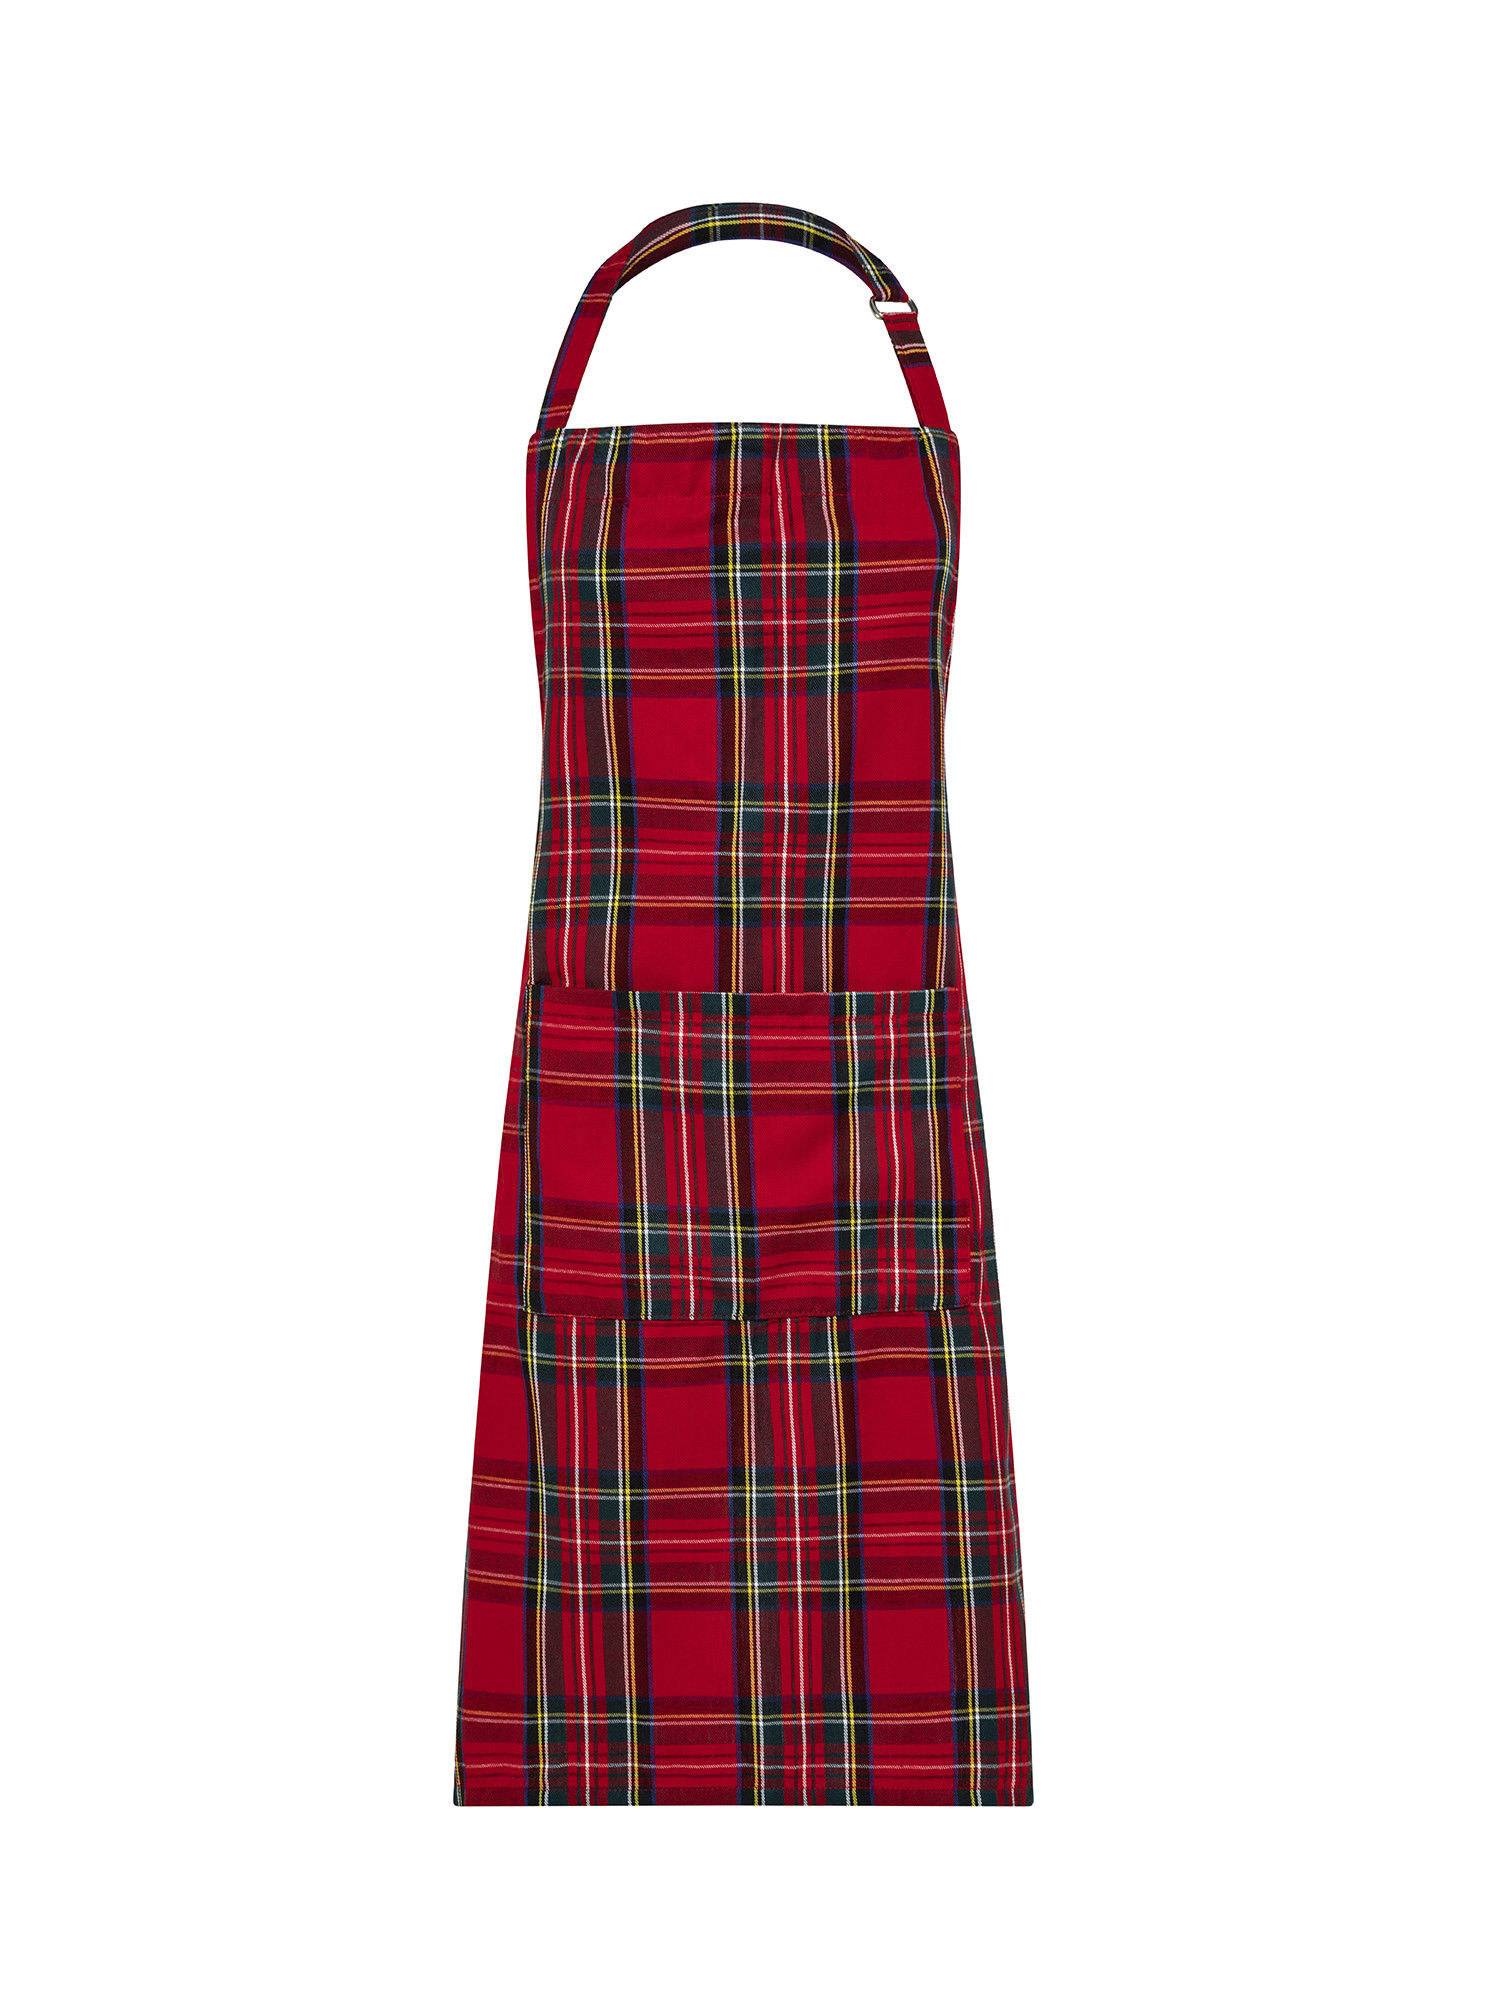 Tartan cotton twill kitchen apron, Red, large image number 0